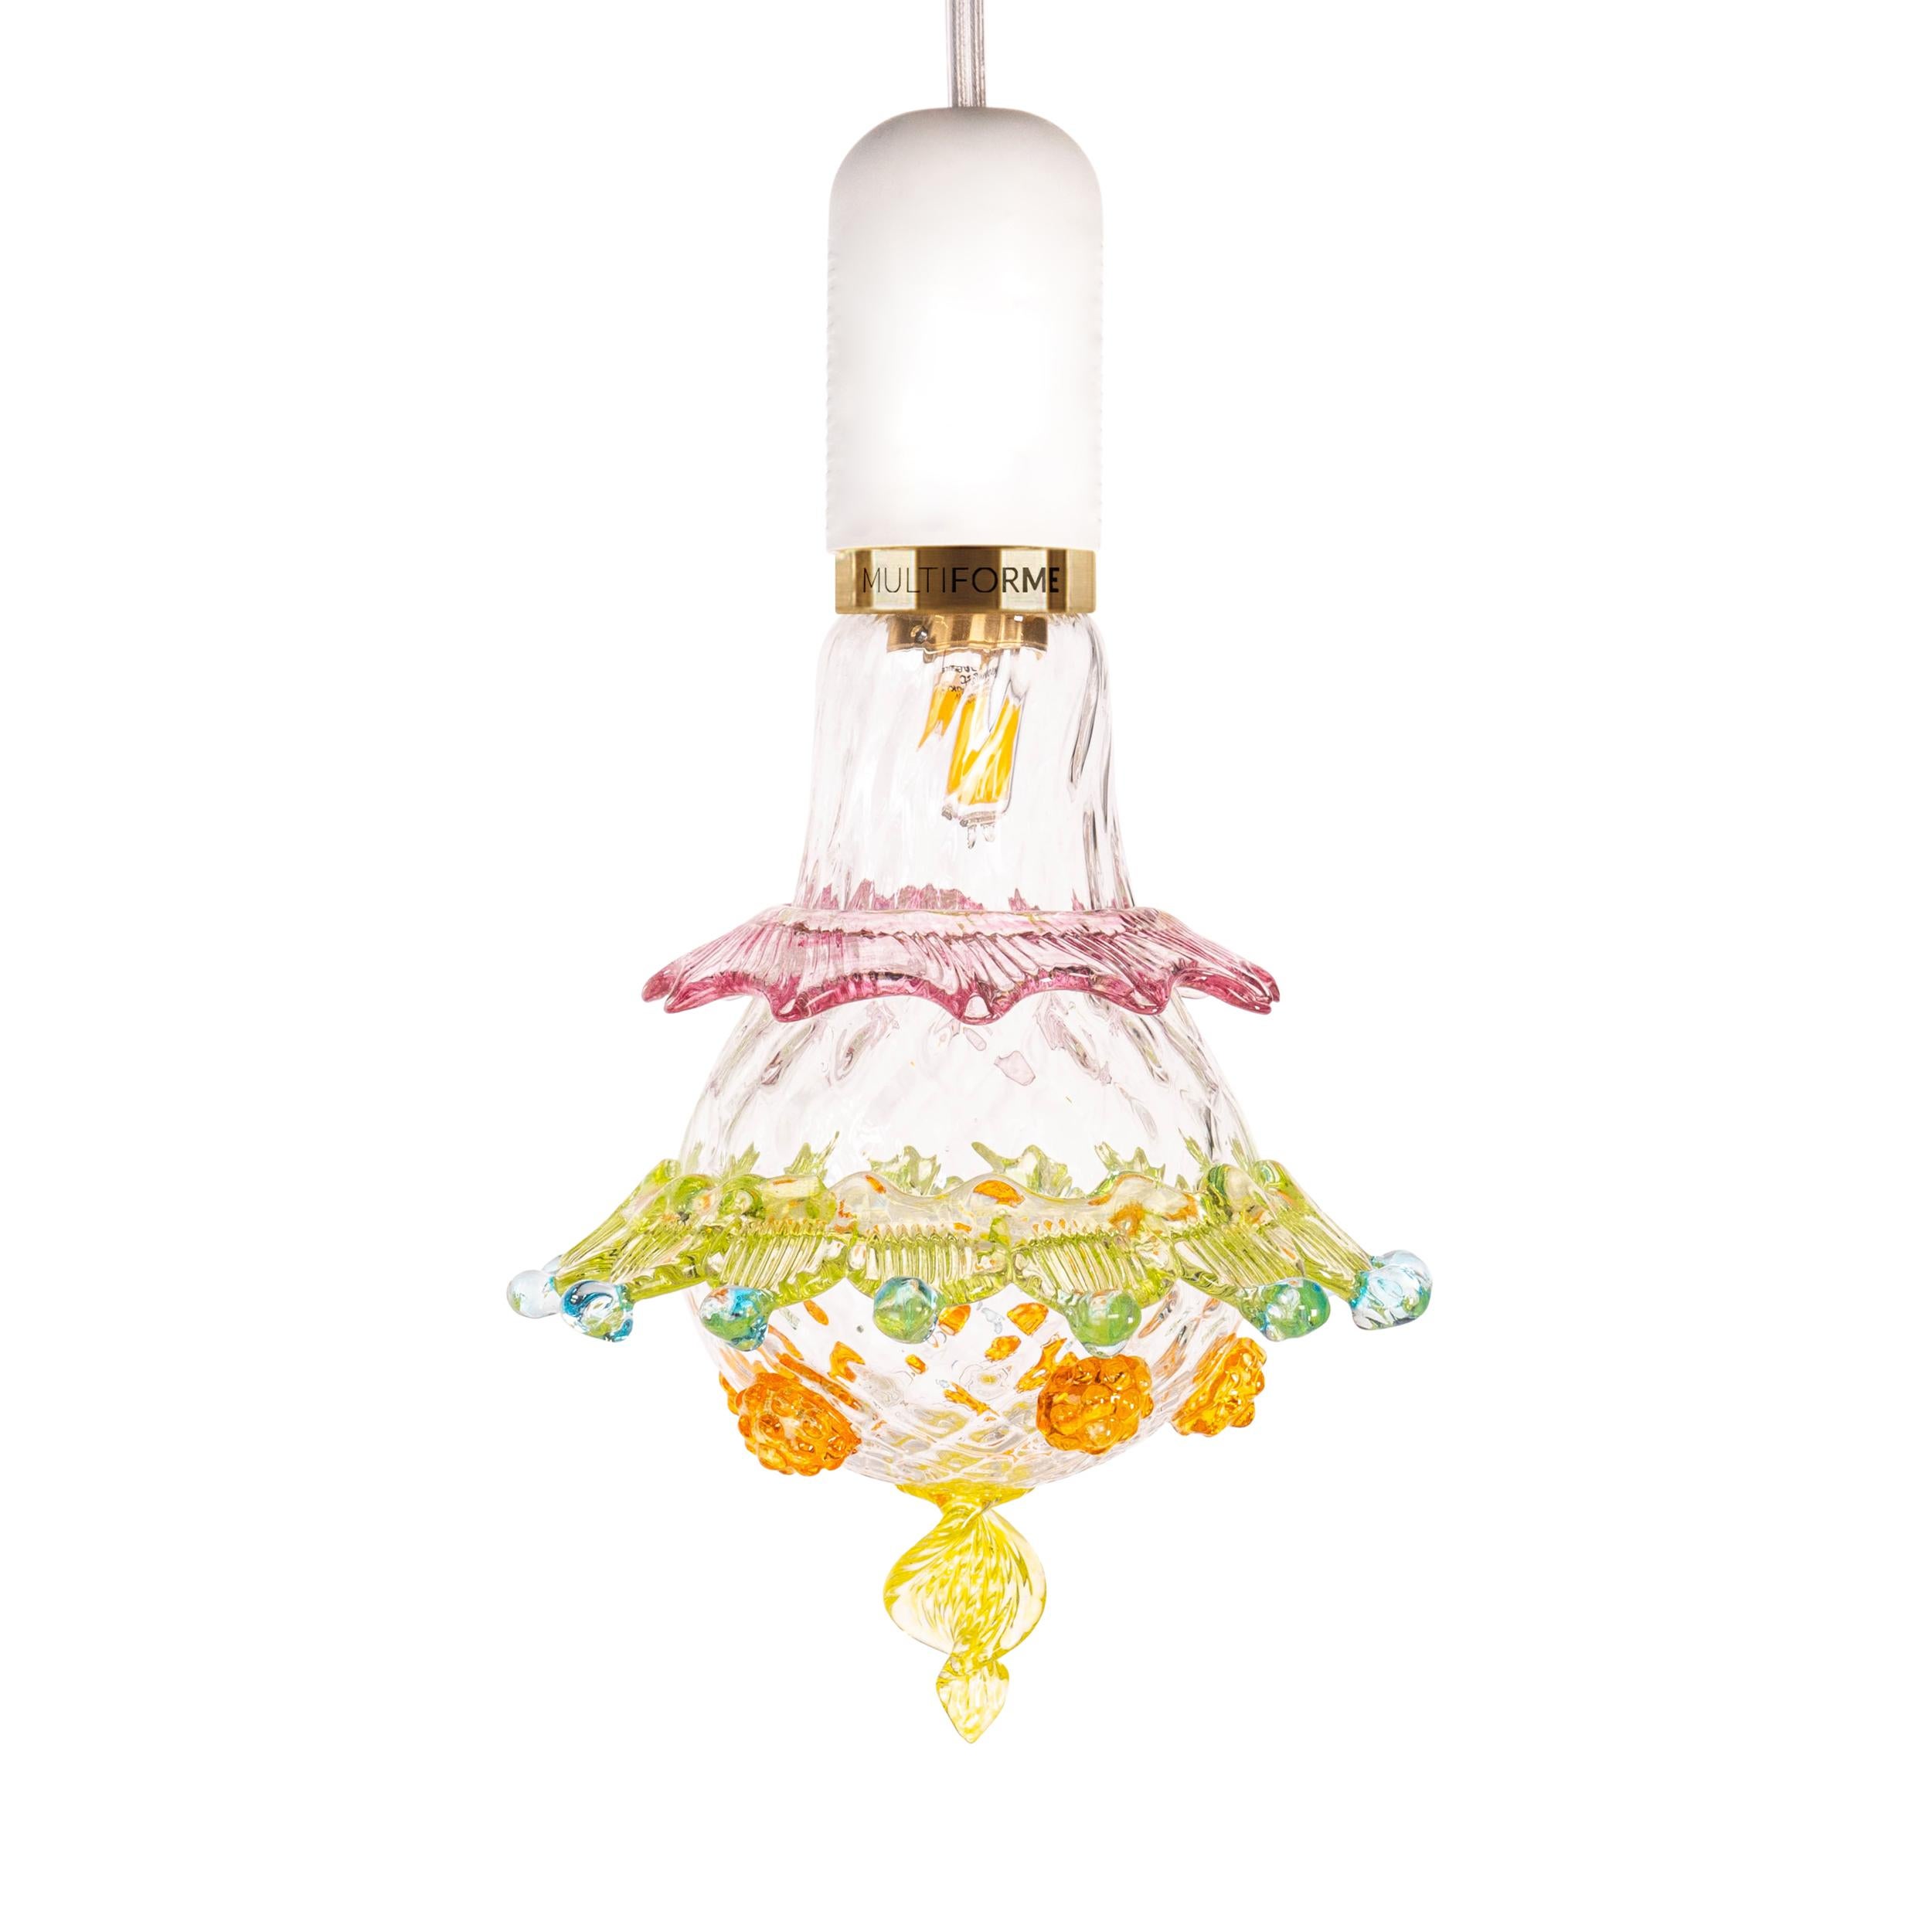 Artistic glass lightbulb chandelier Murano Bulb Marcantonio X Multiforme #12 In New Condition For Sale In Trebaseleghe, IT